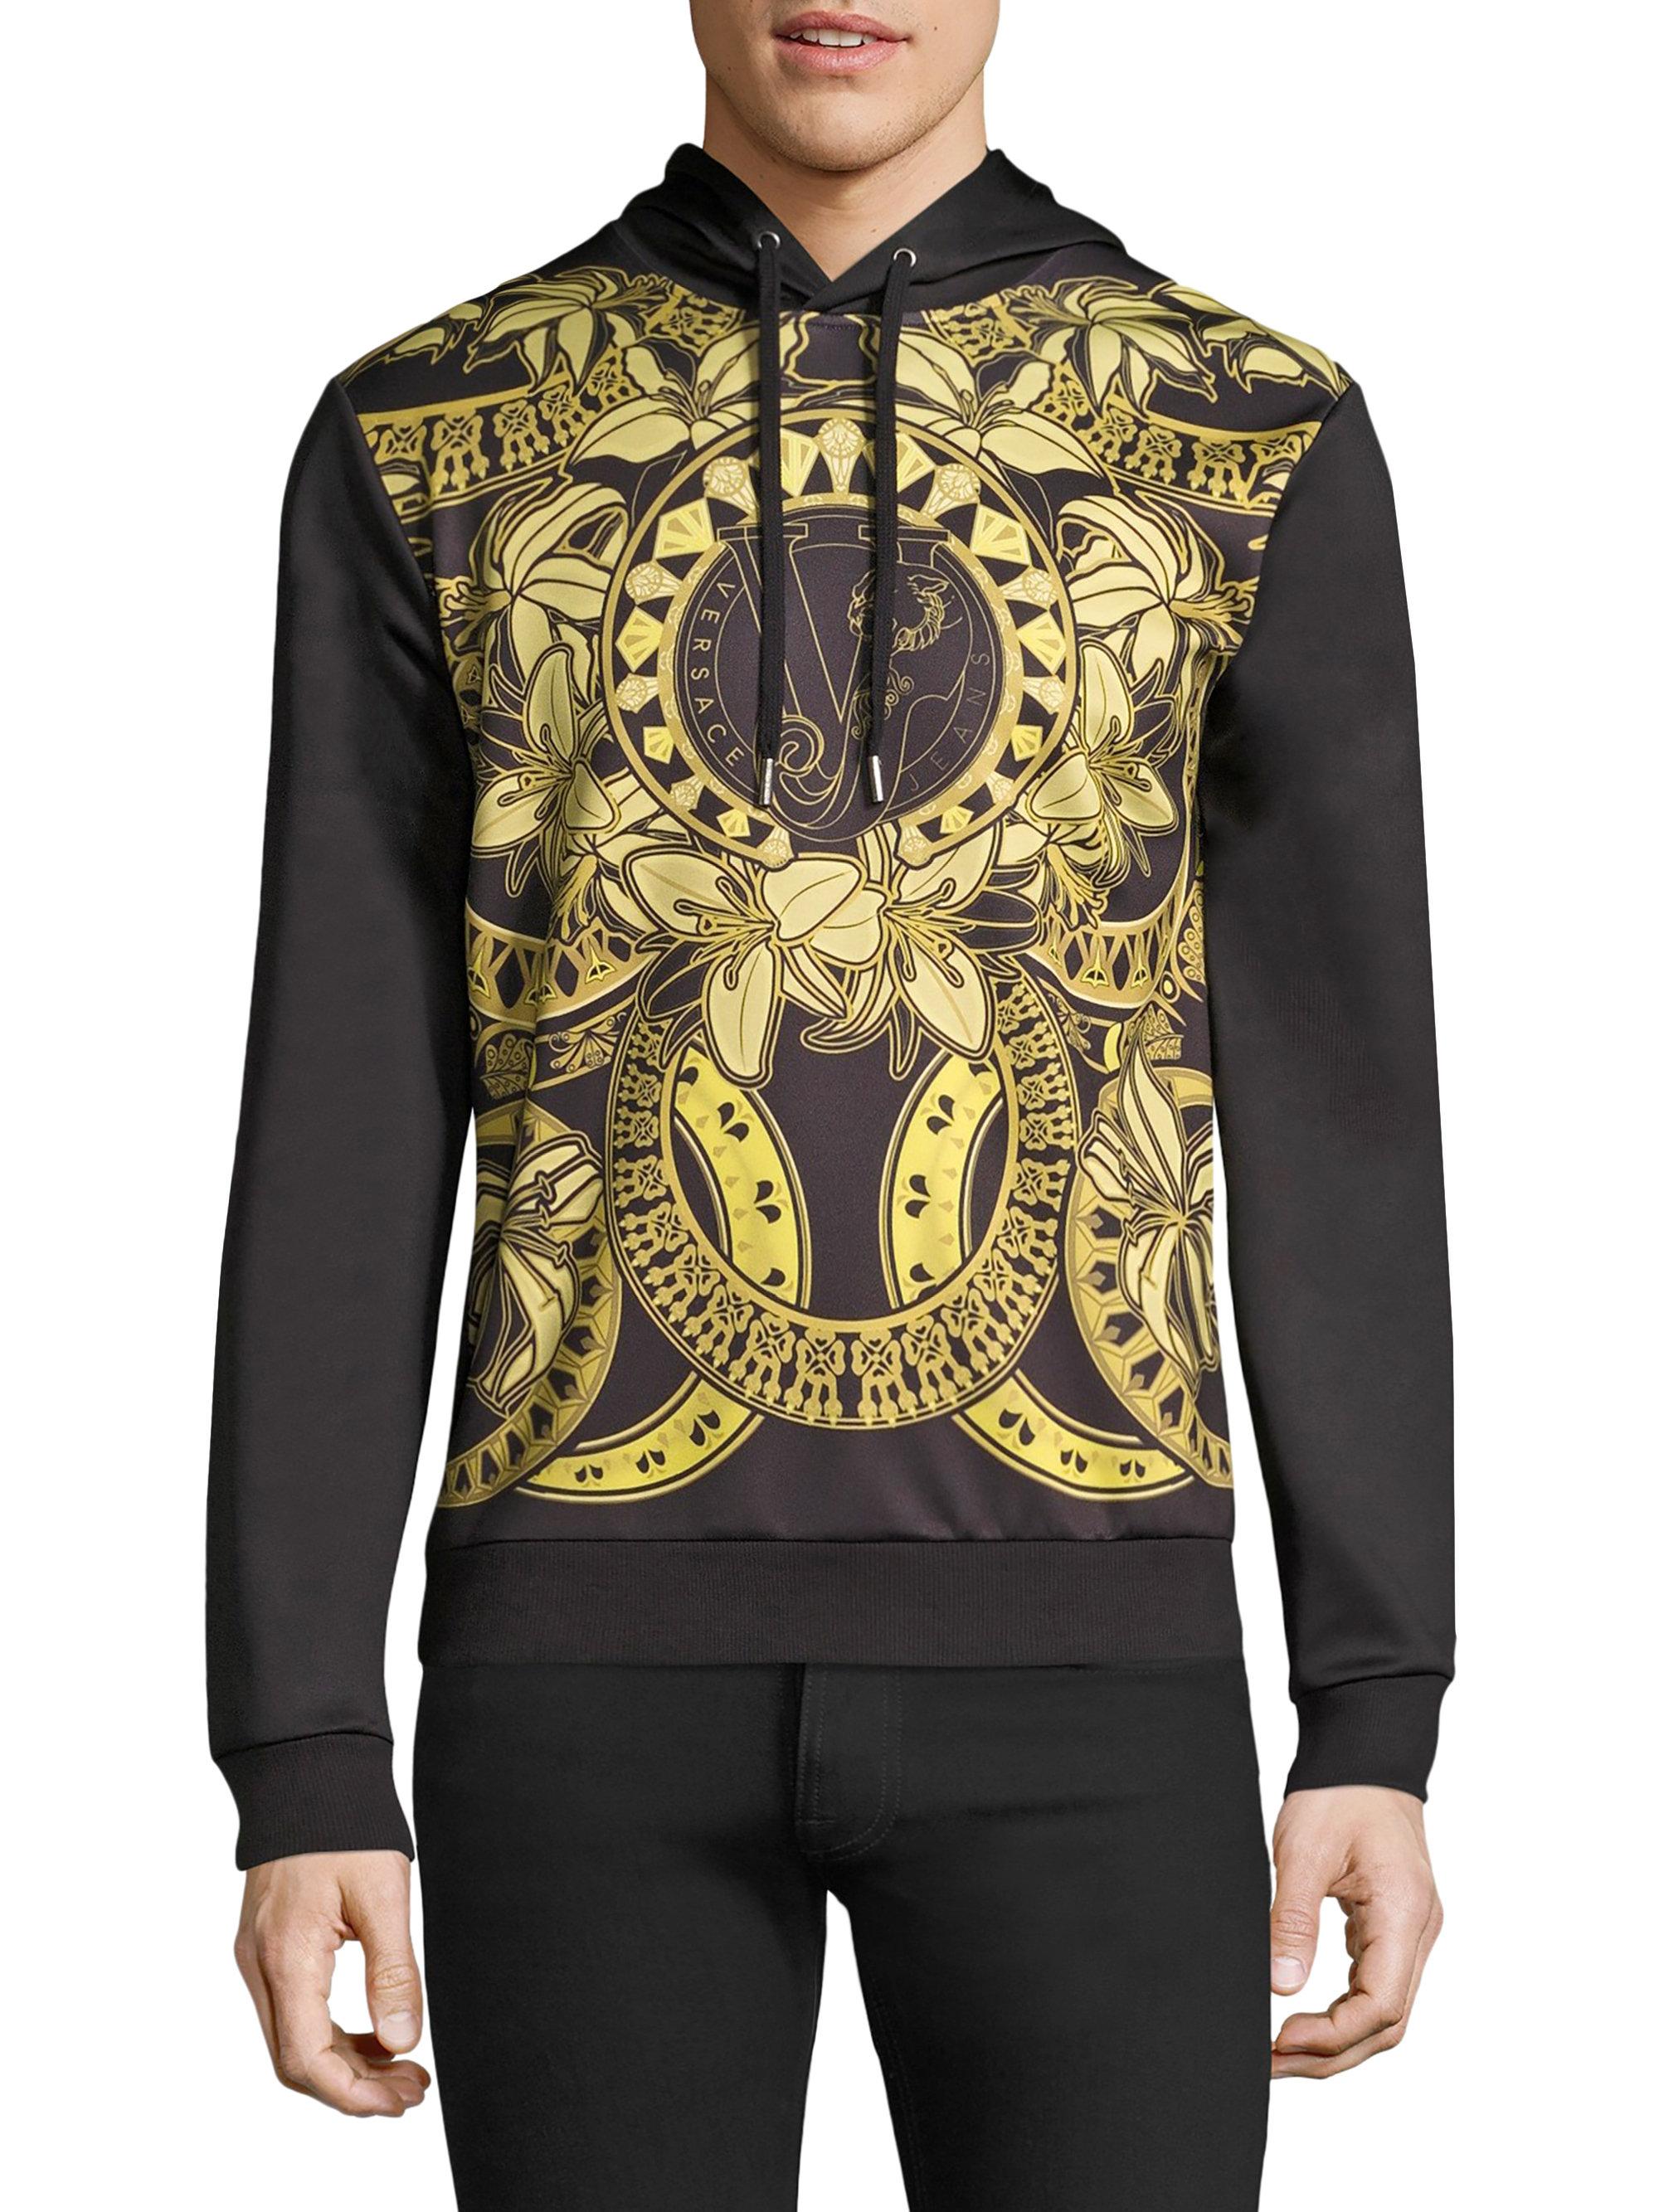 Lyst - Versace Jeans Gold Chain Nero Hooded Sweatshirt in Black for Men